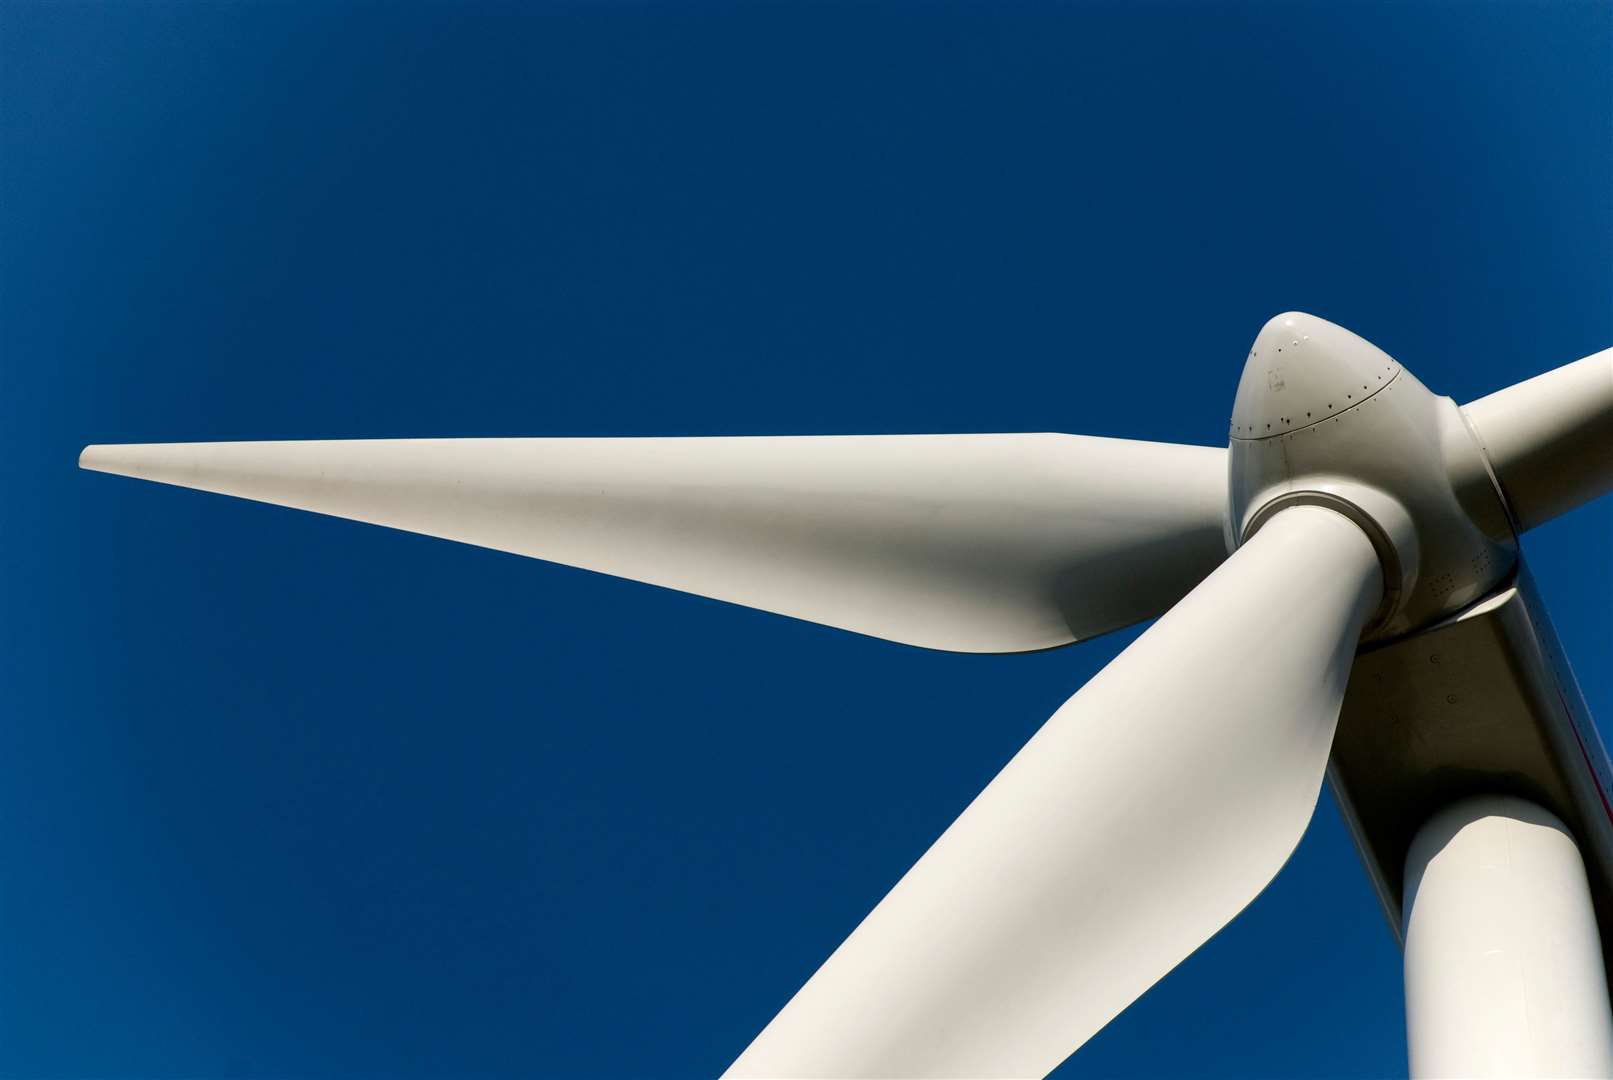 Force 9 Energy is proposing a wind farm on Balblair Estate, west of Bonar Bridge.